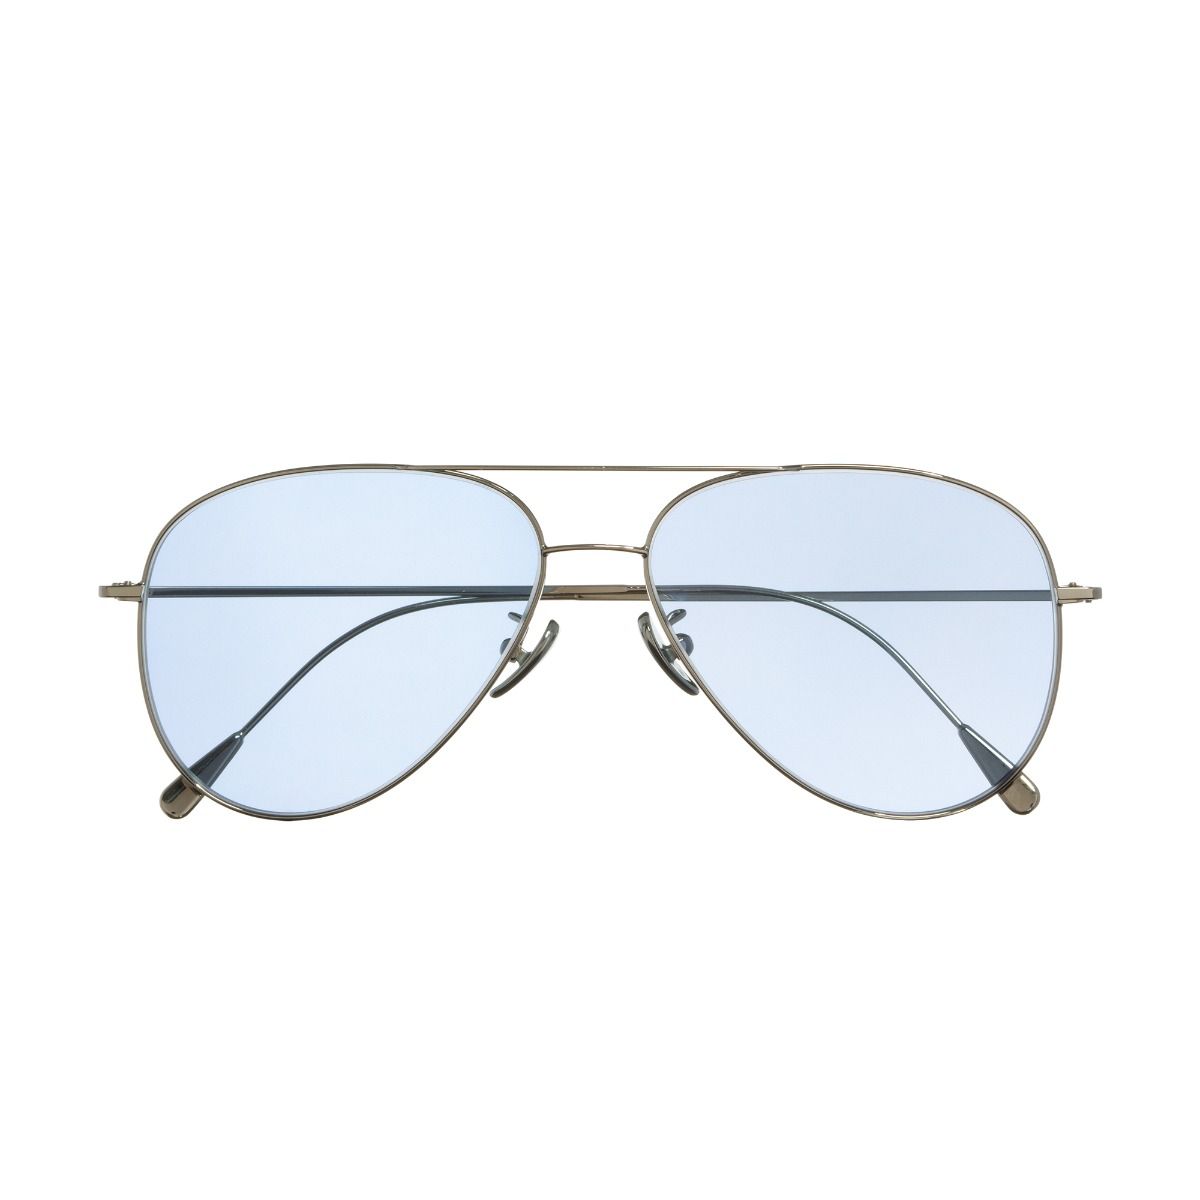 1266 Palladium Plated Aviator Sunglasses-Pale Blue